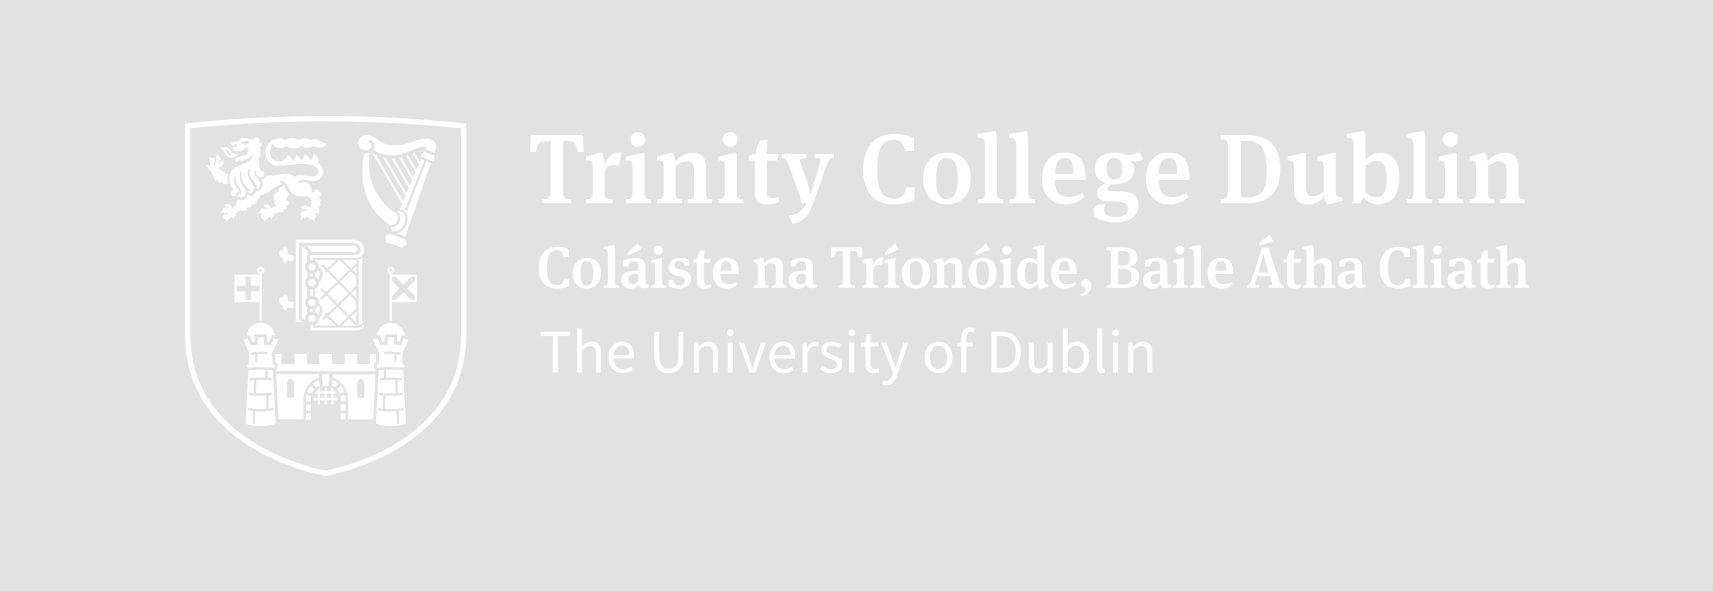 TCD Logo - Identity College Dublin